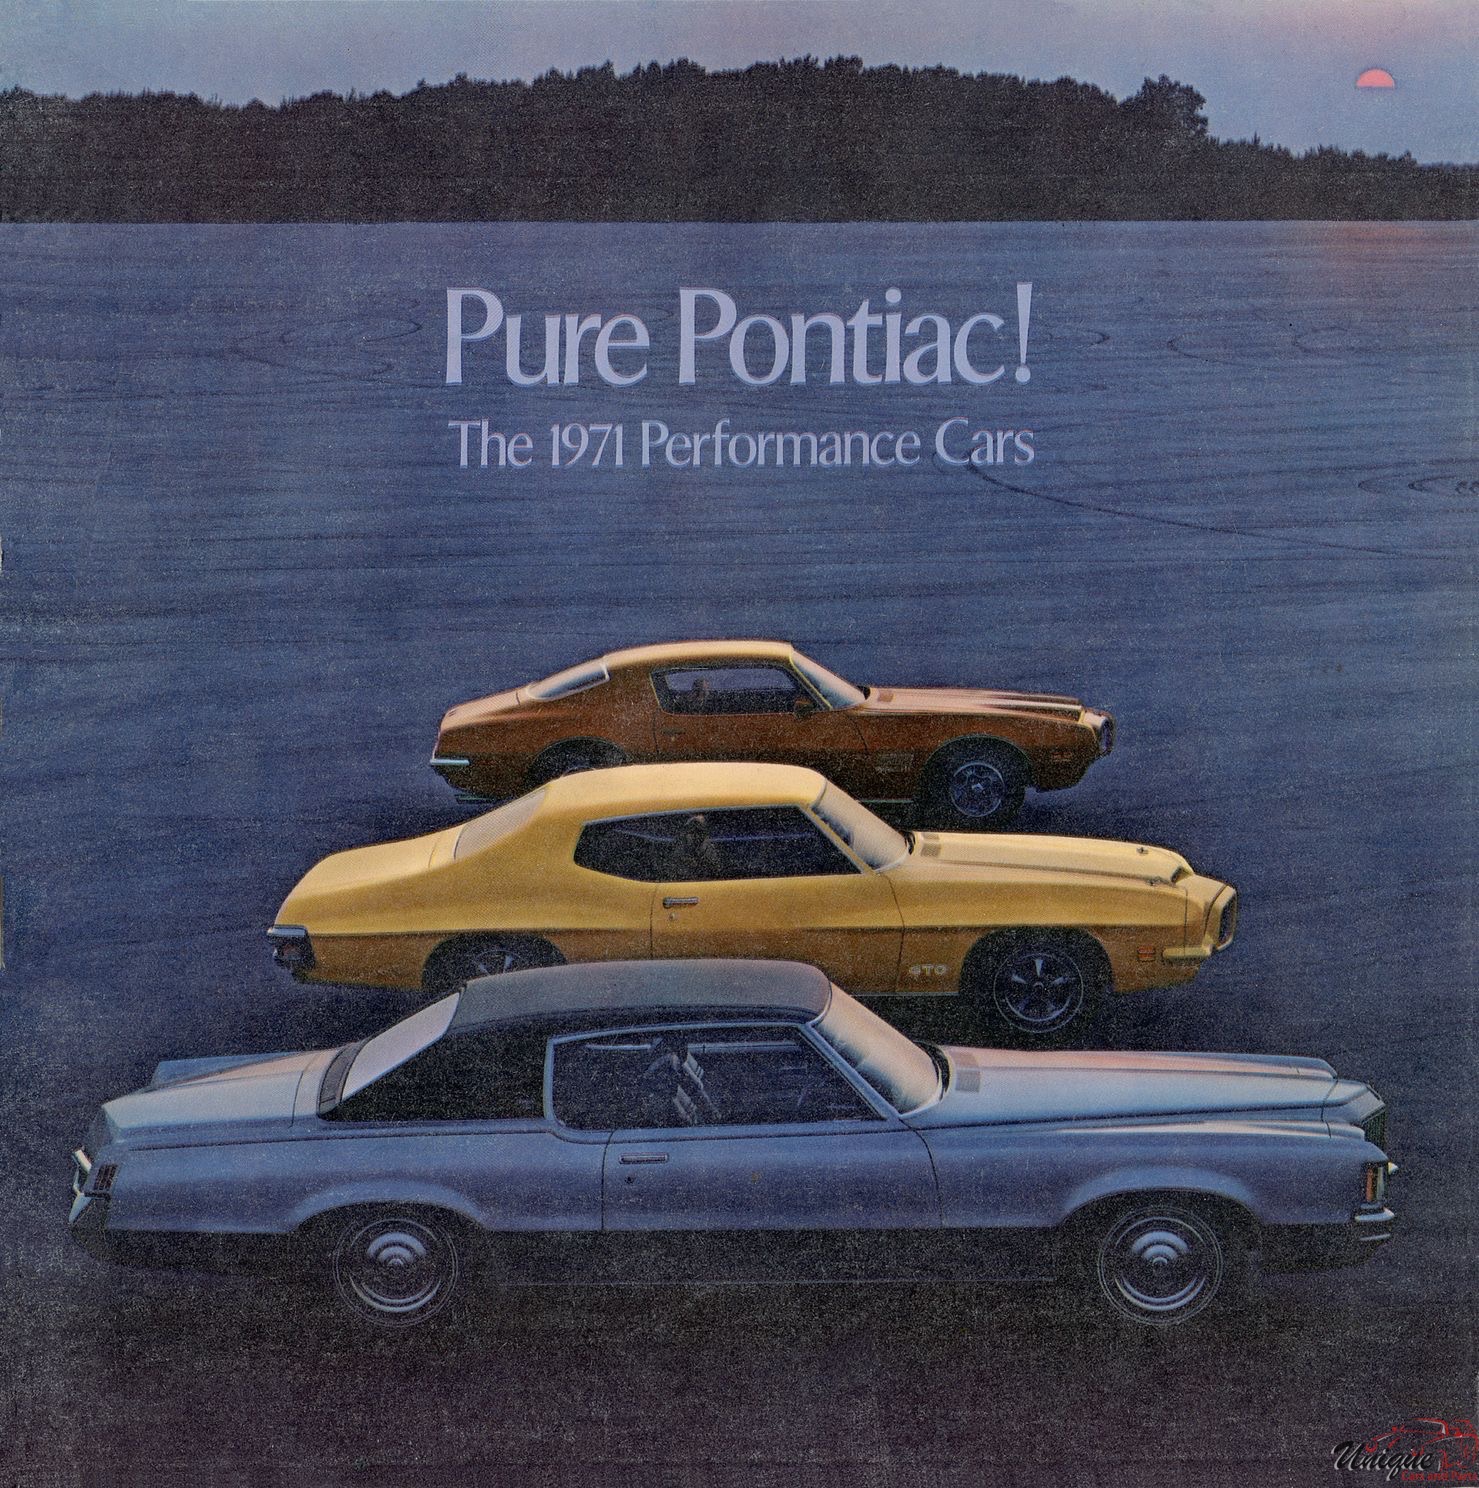 1971 Pontiac Performance Cars Brochure